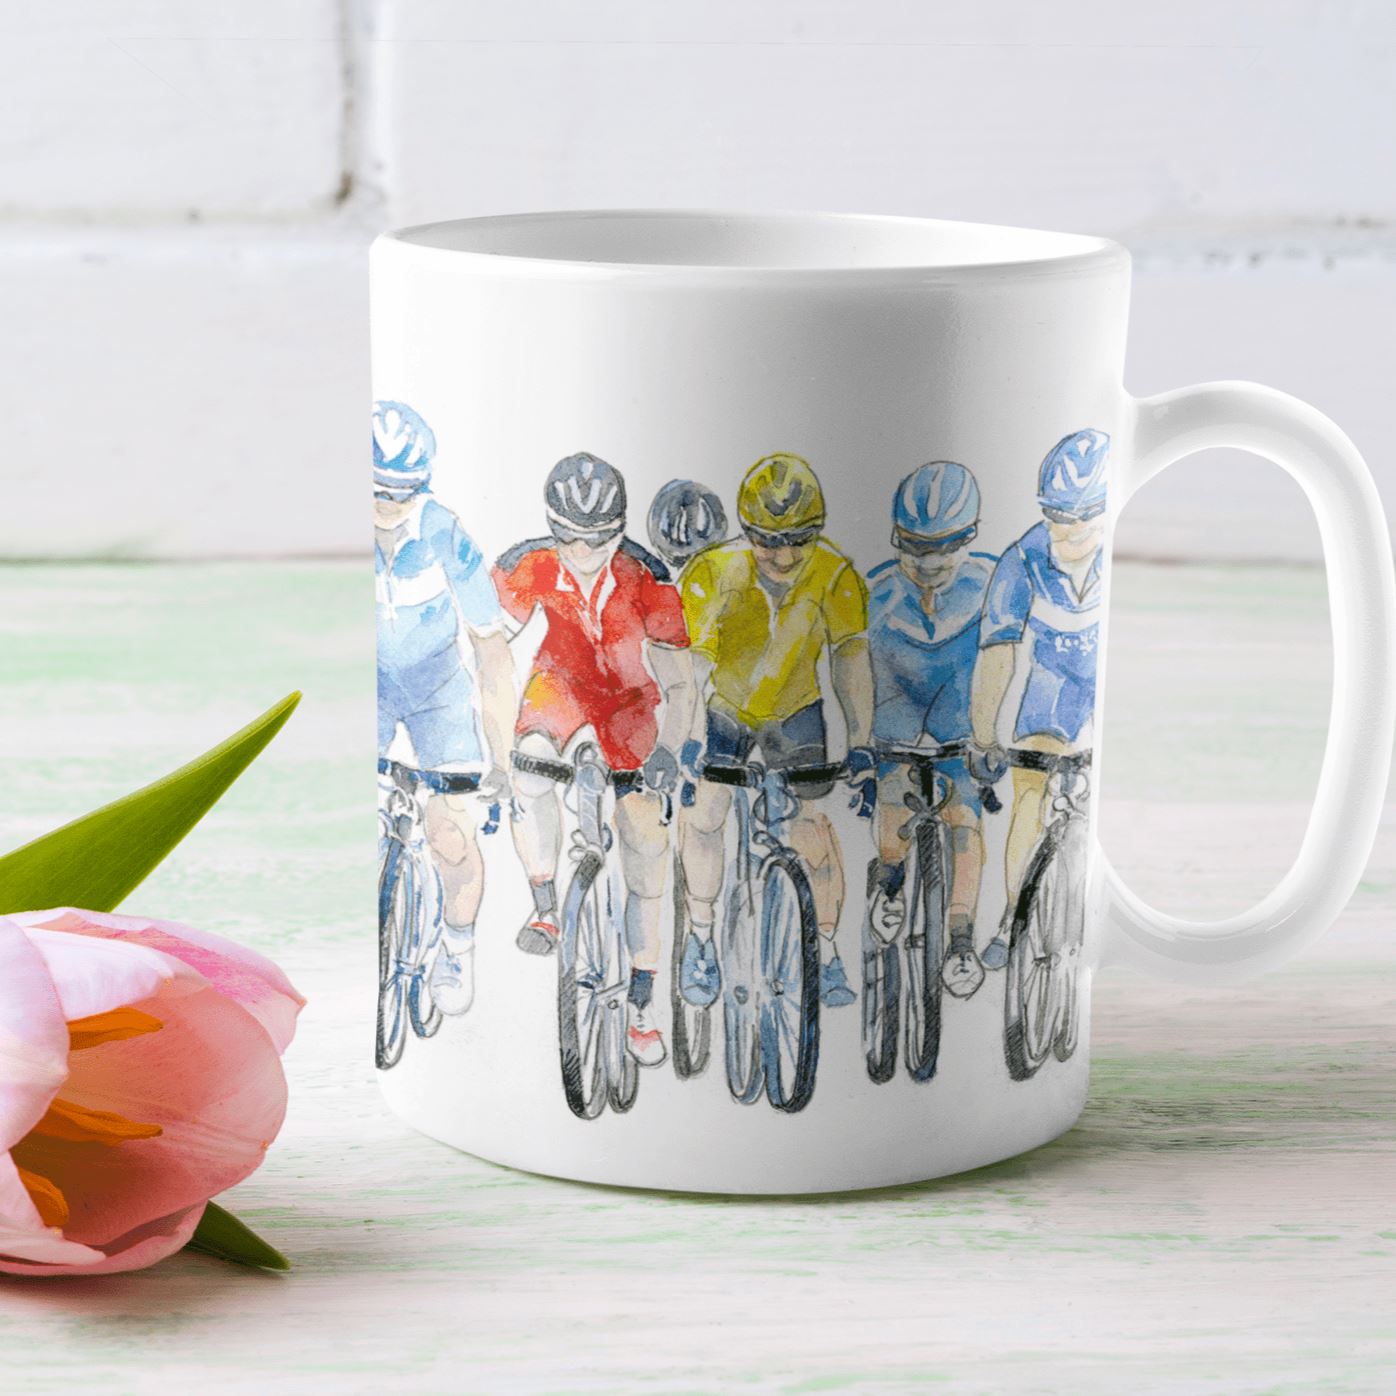 Colourful Cycling Ceramic Mug designed by artist Sheila Gill
